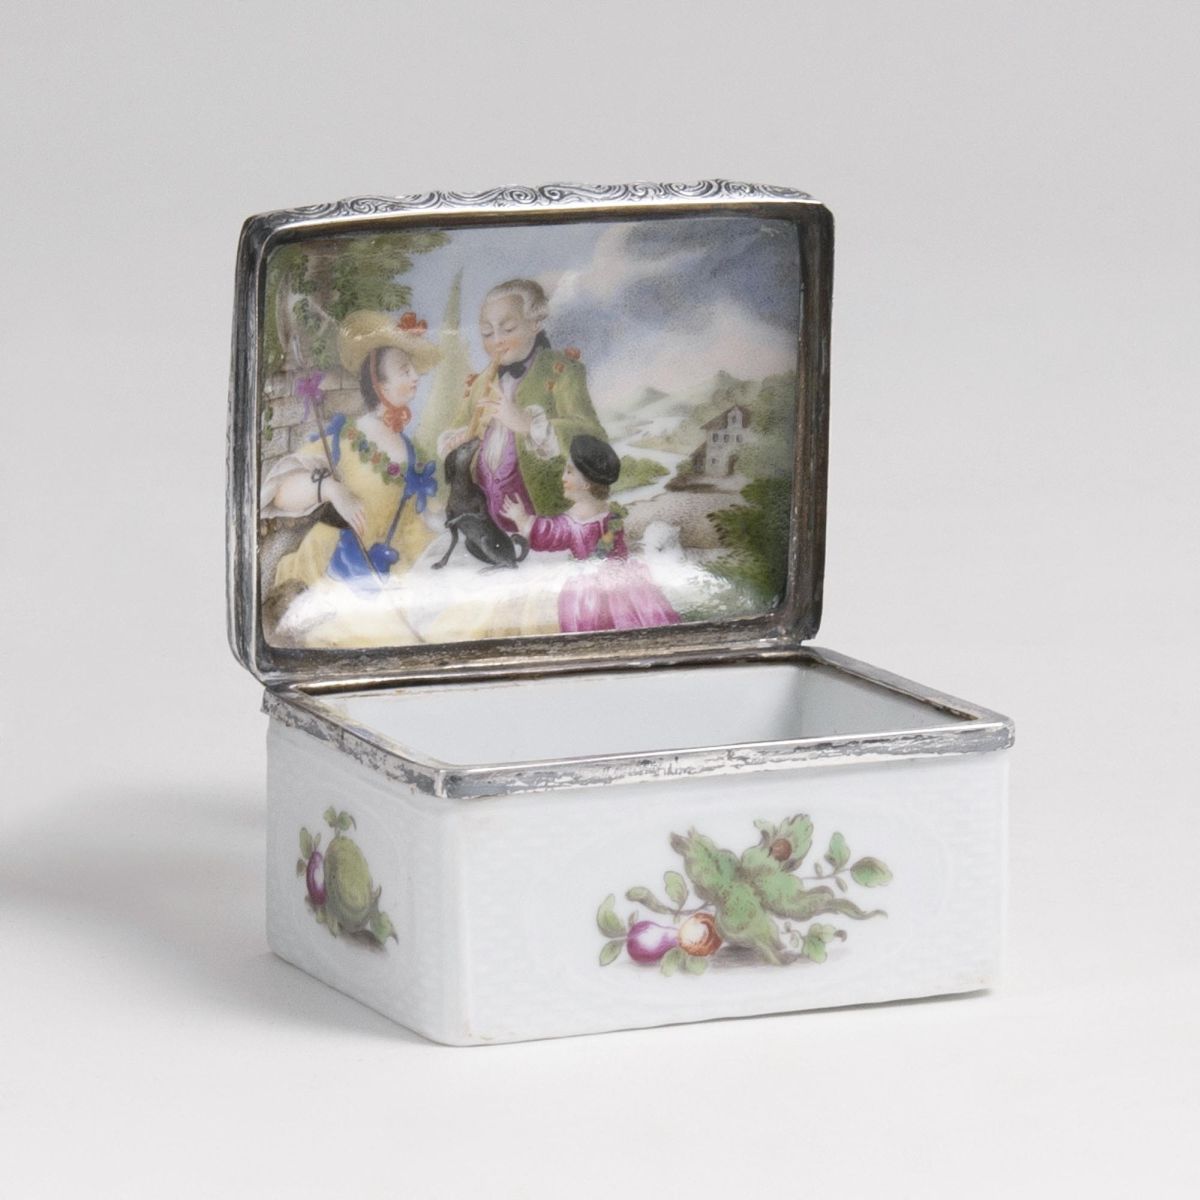 A rare Copenhagen Snuff Box with Flowers and Pastoral Scene